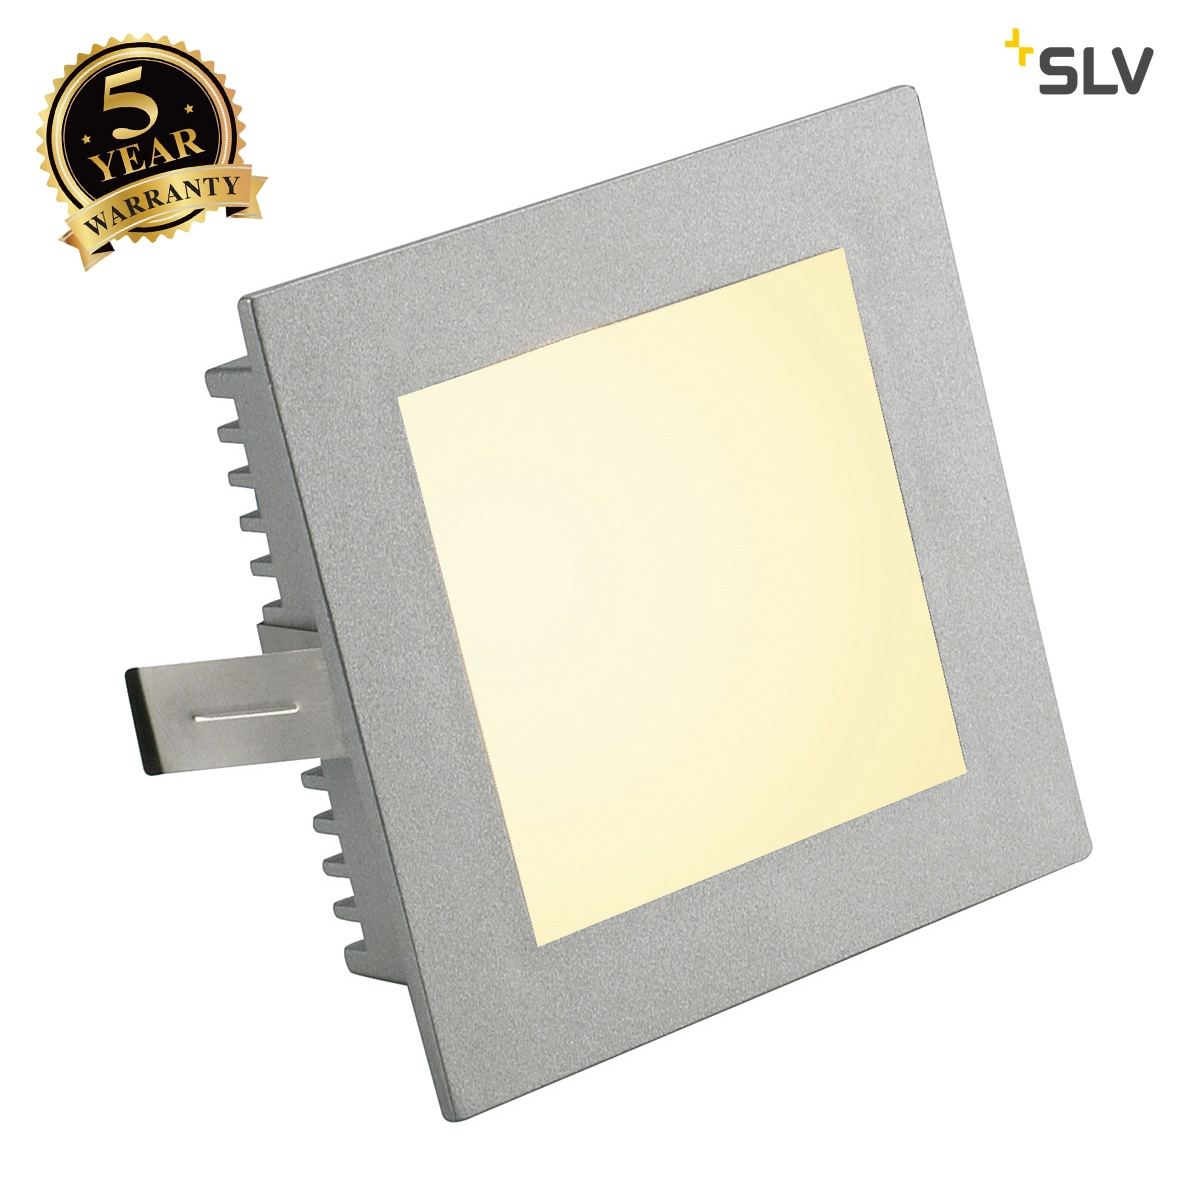 SLV FLAT FRAME BASIC recessed light, square, silver-grey, G4 , max. 20W 112732